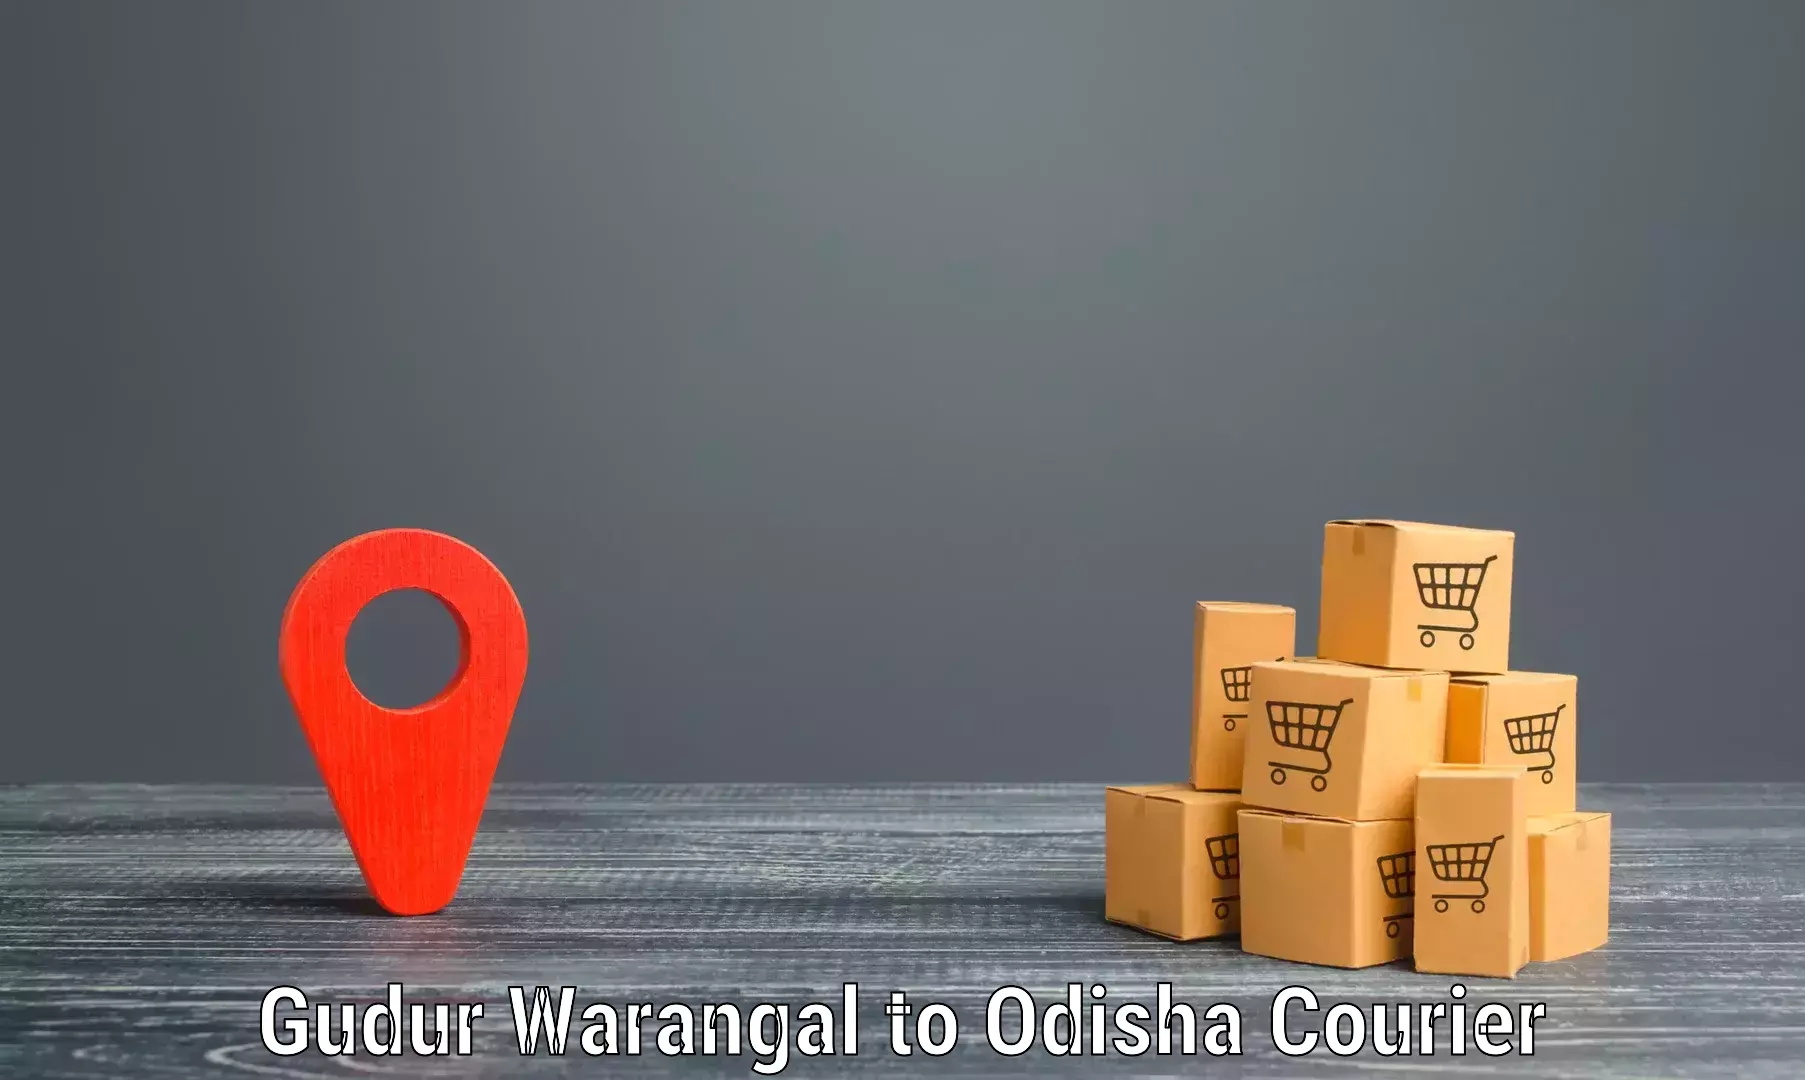 International parcel service Gudur Warangal to Komana